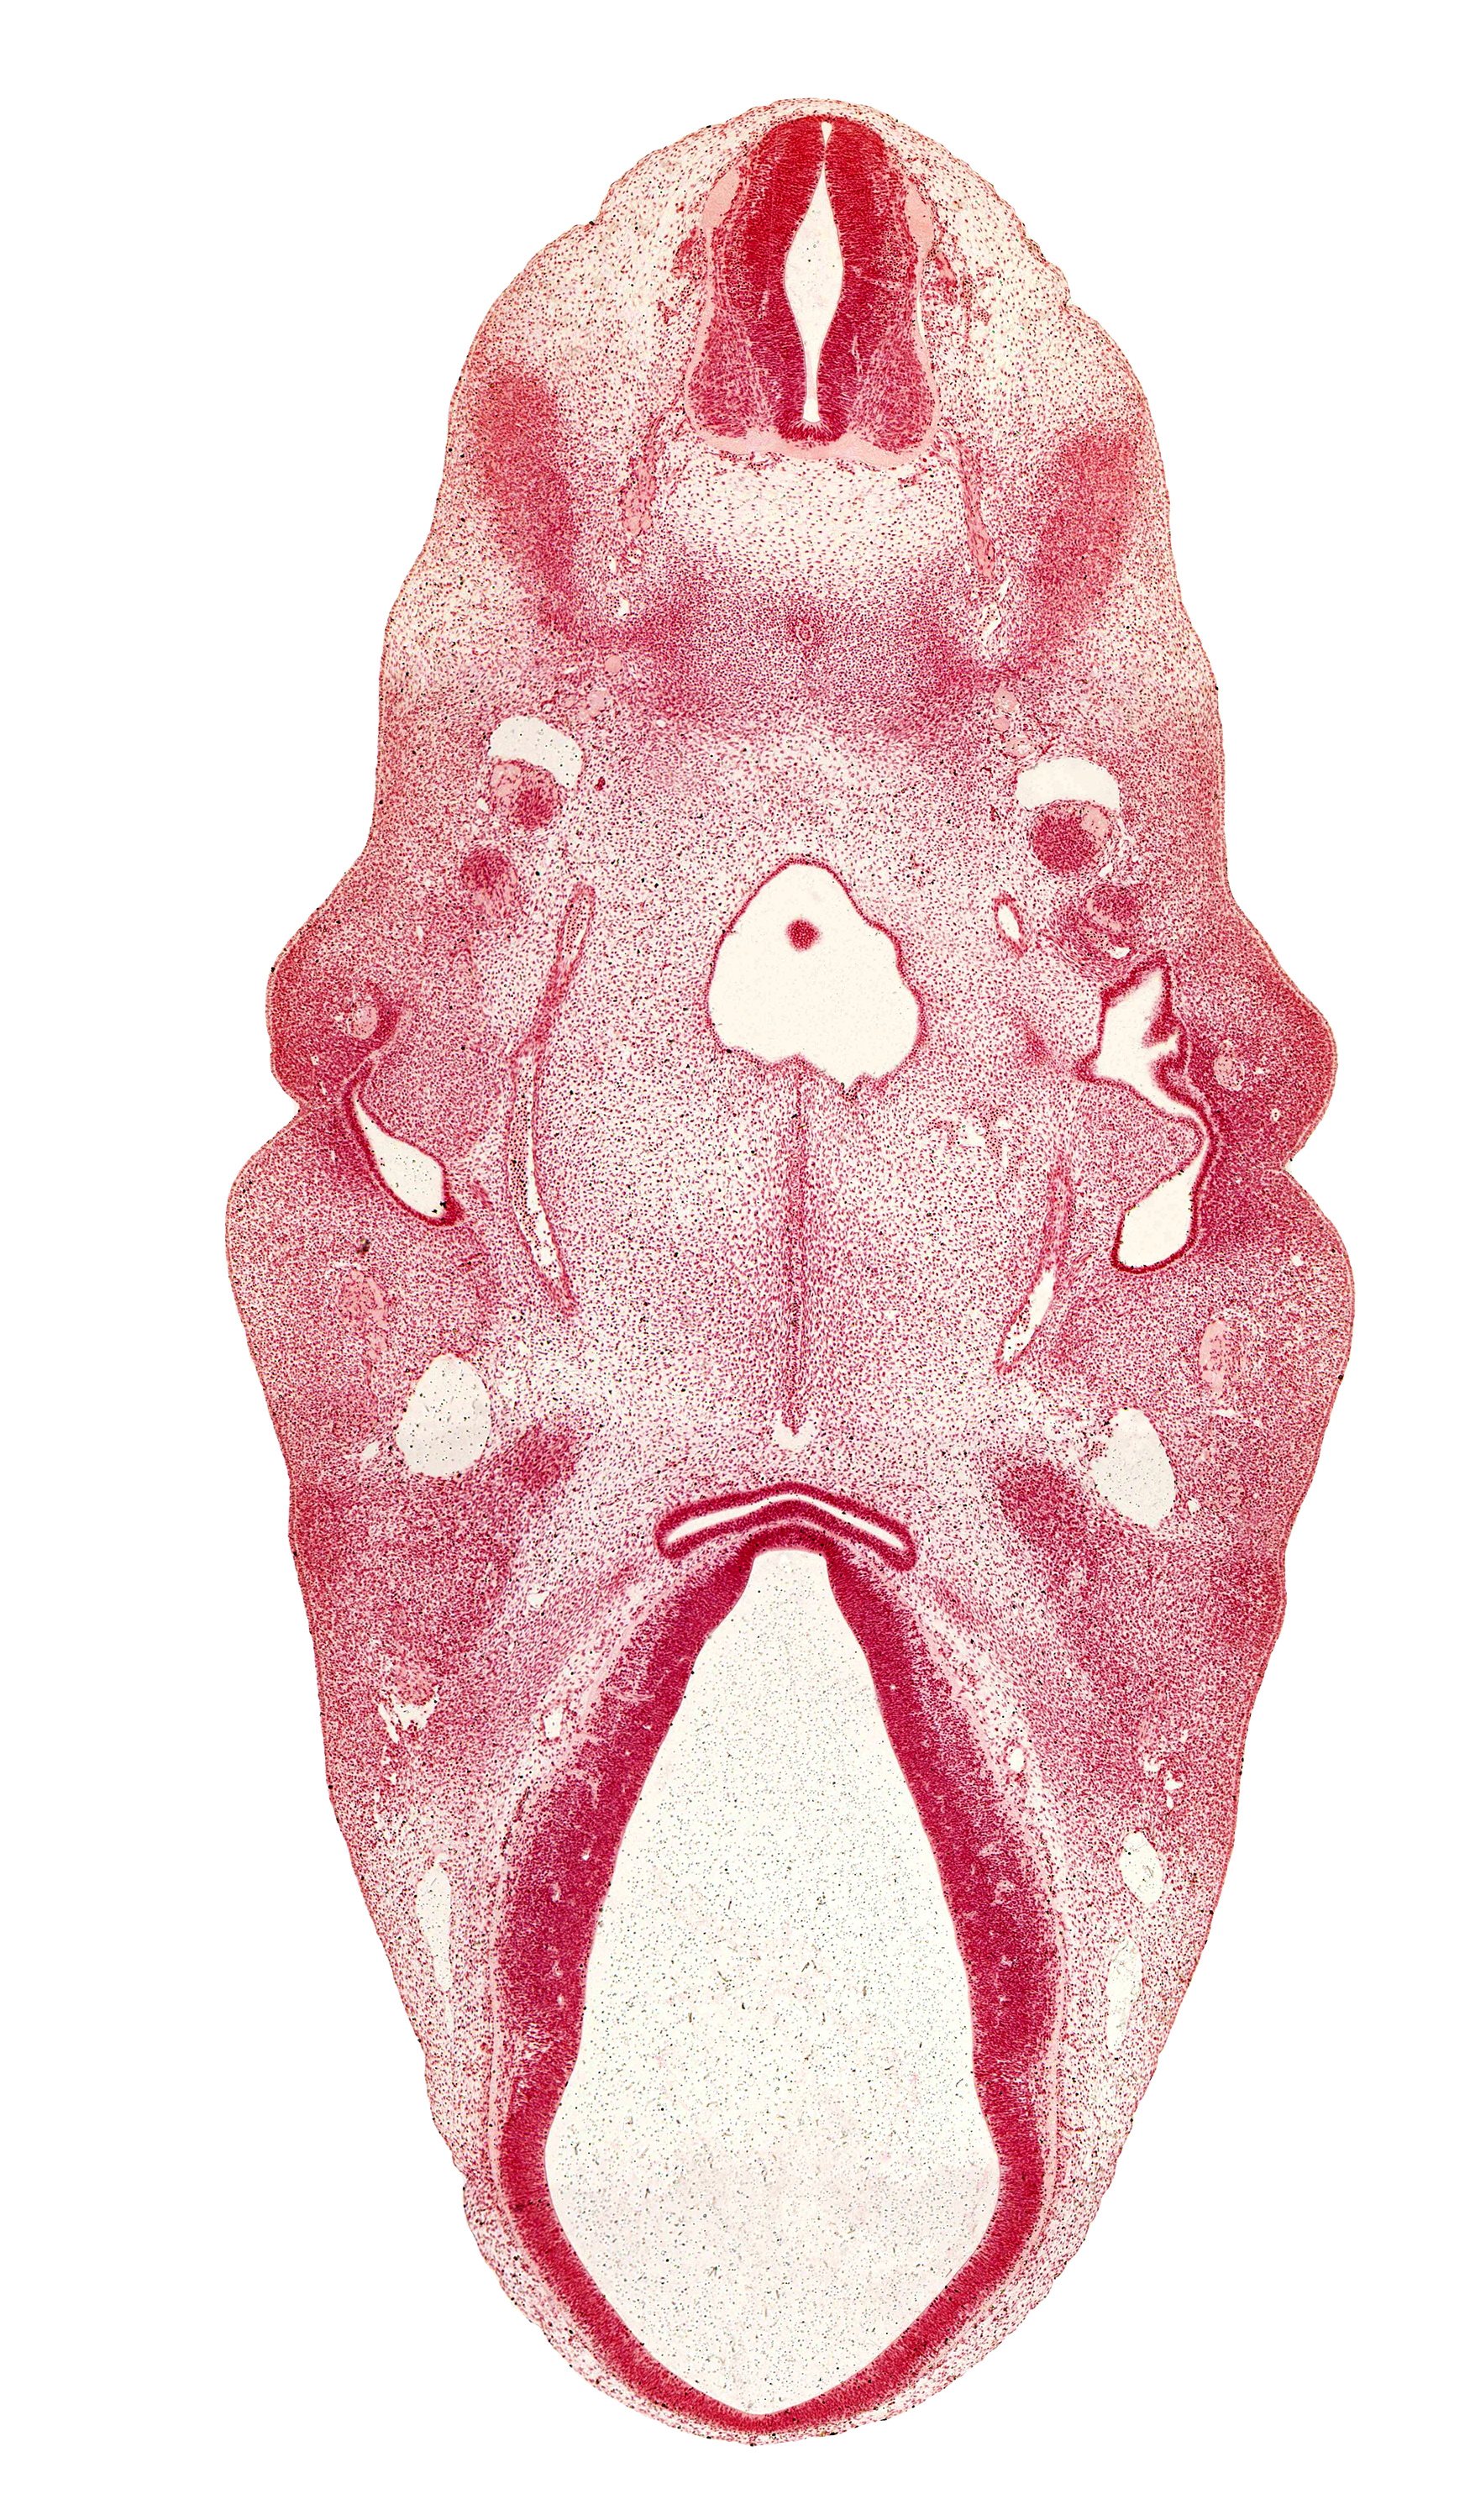 cephalic part of C-2 spinal ganglion, cephalic part of tongue, diencephalon, dorsal fasciculus, dorsal thalamus, epithalamus, extra-ocular premuscle mass, facial nerve (CN VII), hypoglossal nerve (CN XII), hypopharyngeal eminence of tongue, hypothalamus, internal carotid artery, mandibular nerve (CN V₃), maxillary vein, notochord, pharyngeal groove 1, pharyngeal pouch 1, pharyngeal pouch 2, posterior communicating artery, roof of pharynx, third ventricle, ventral thalamus